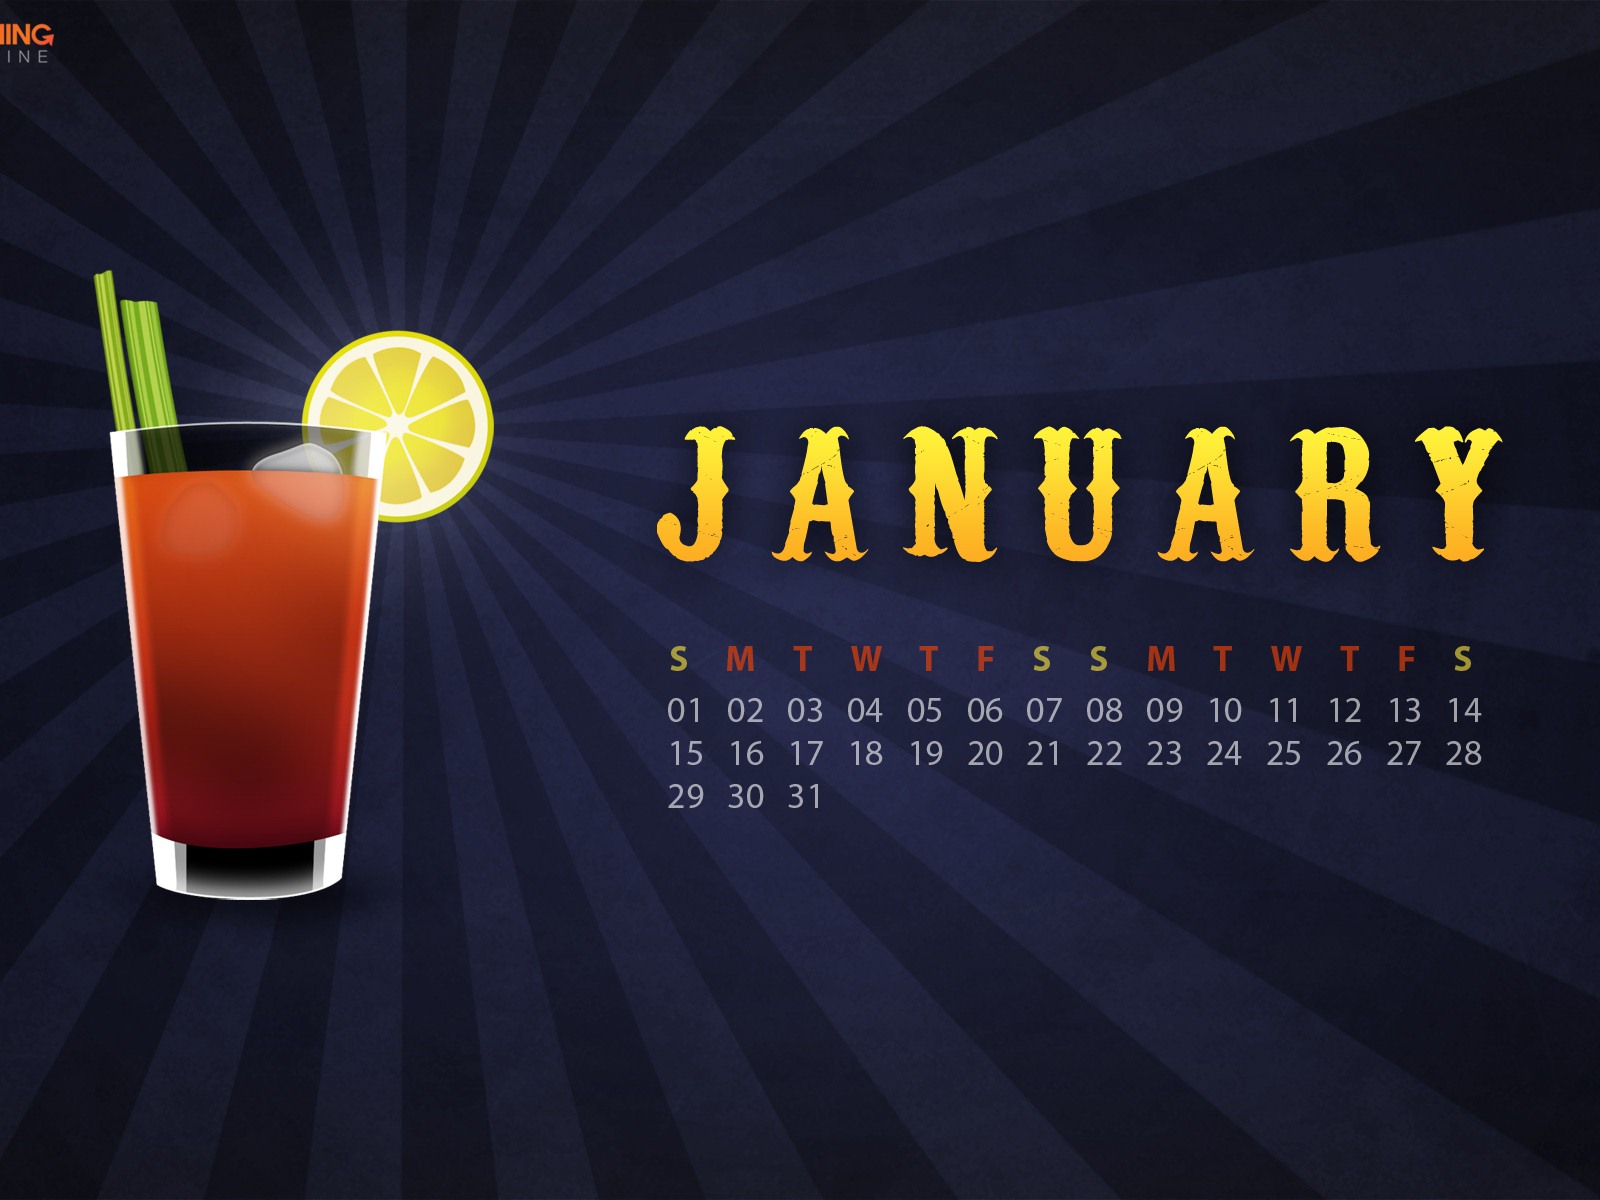 January 2012 Calendar Wallpapers #4 - 1600x1200